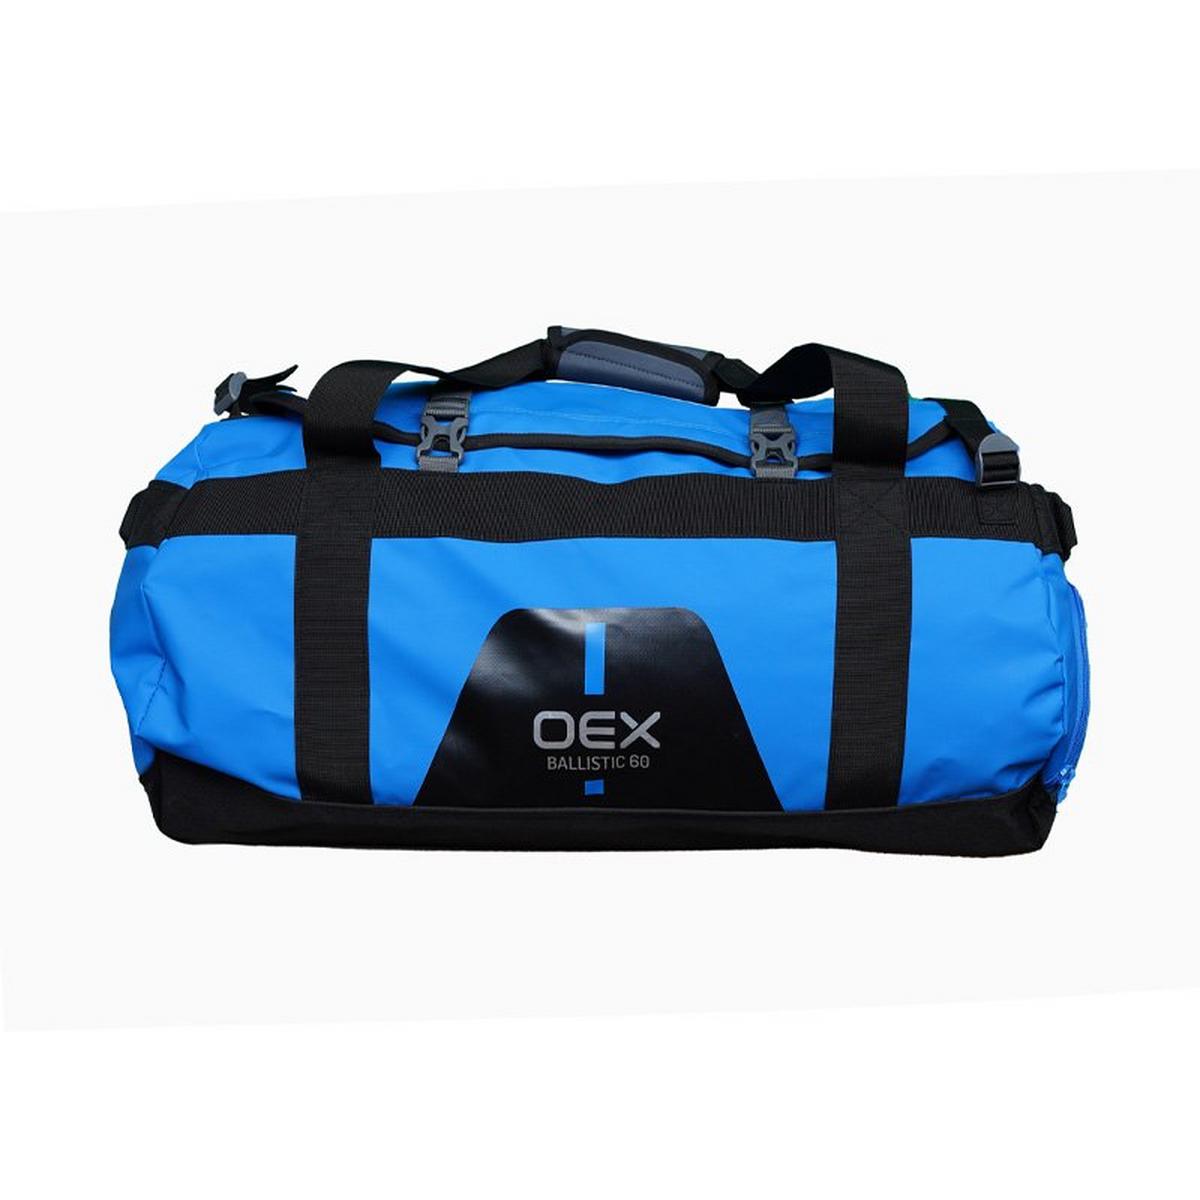 Oex Ballistic 60L Cargo Bag - Bright Blue